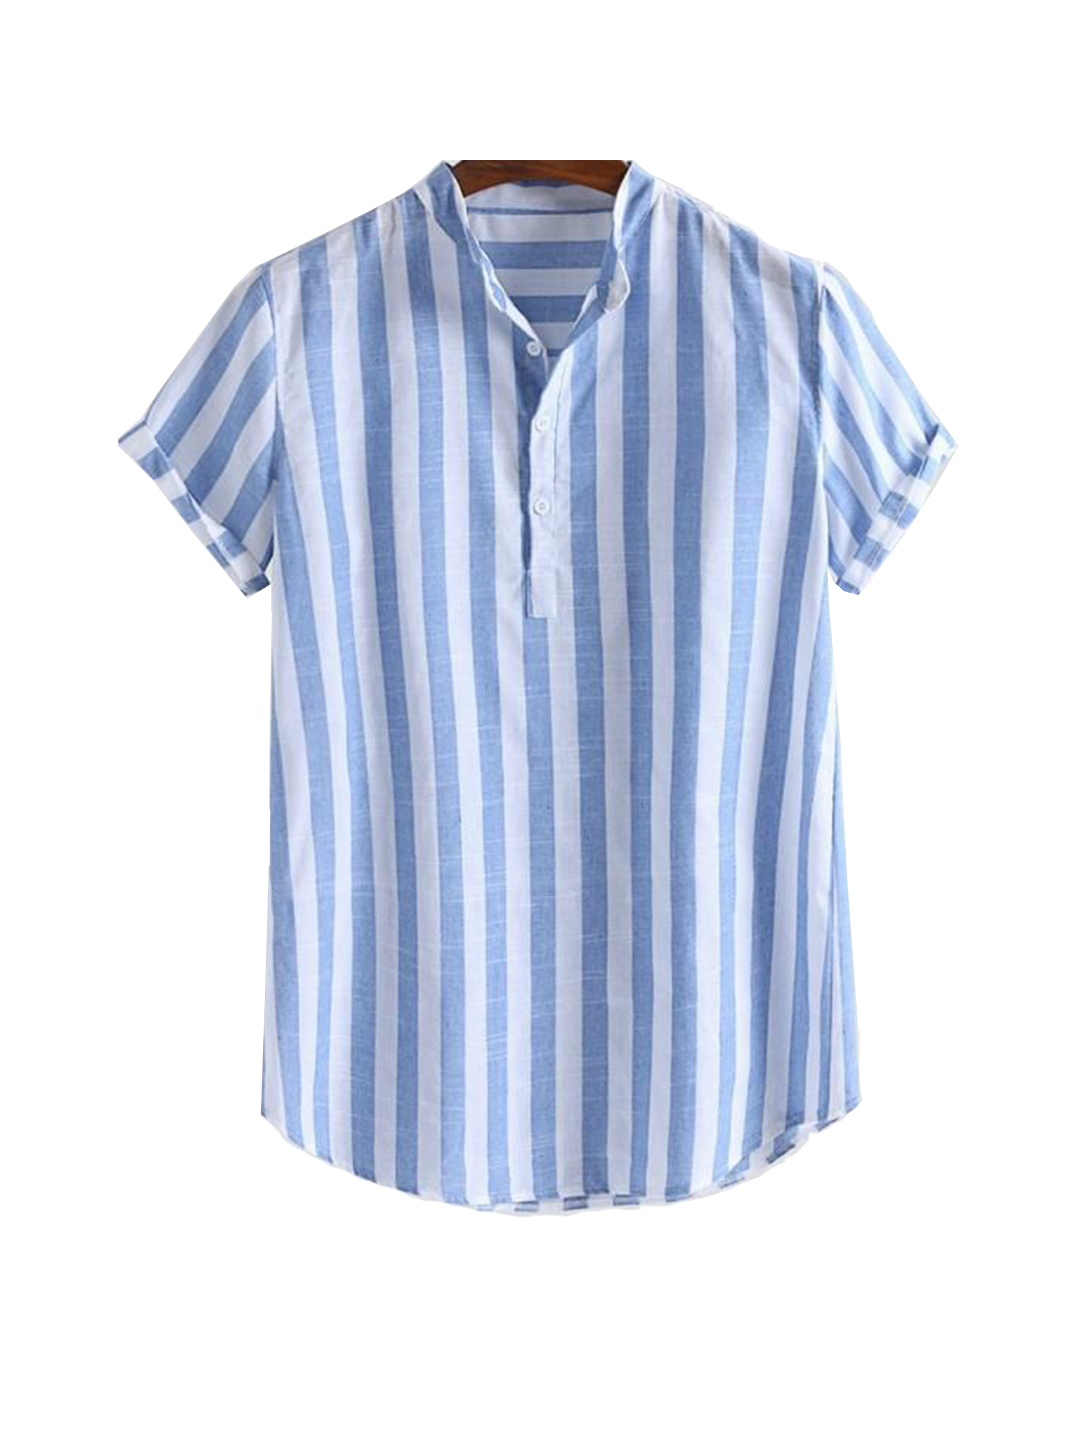 Men's Arrowood Blue Striped Half Button Shirt-poisonstreetwear.com